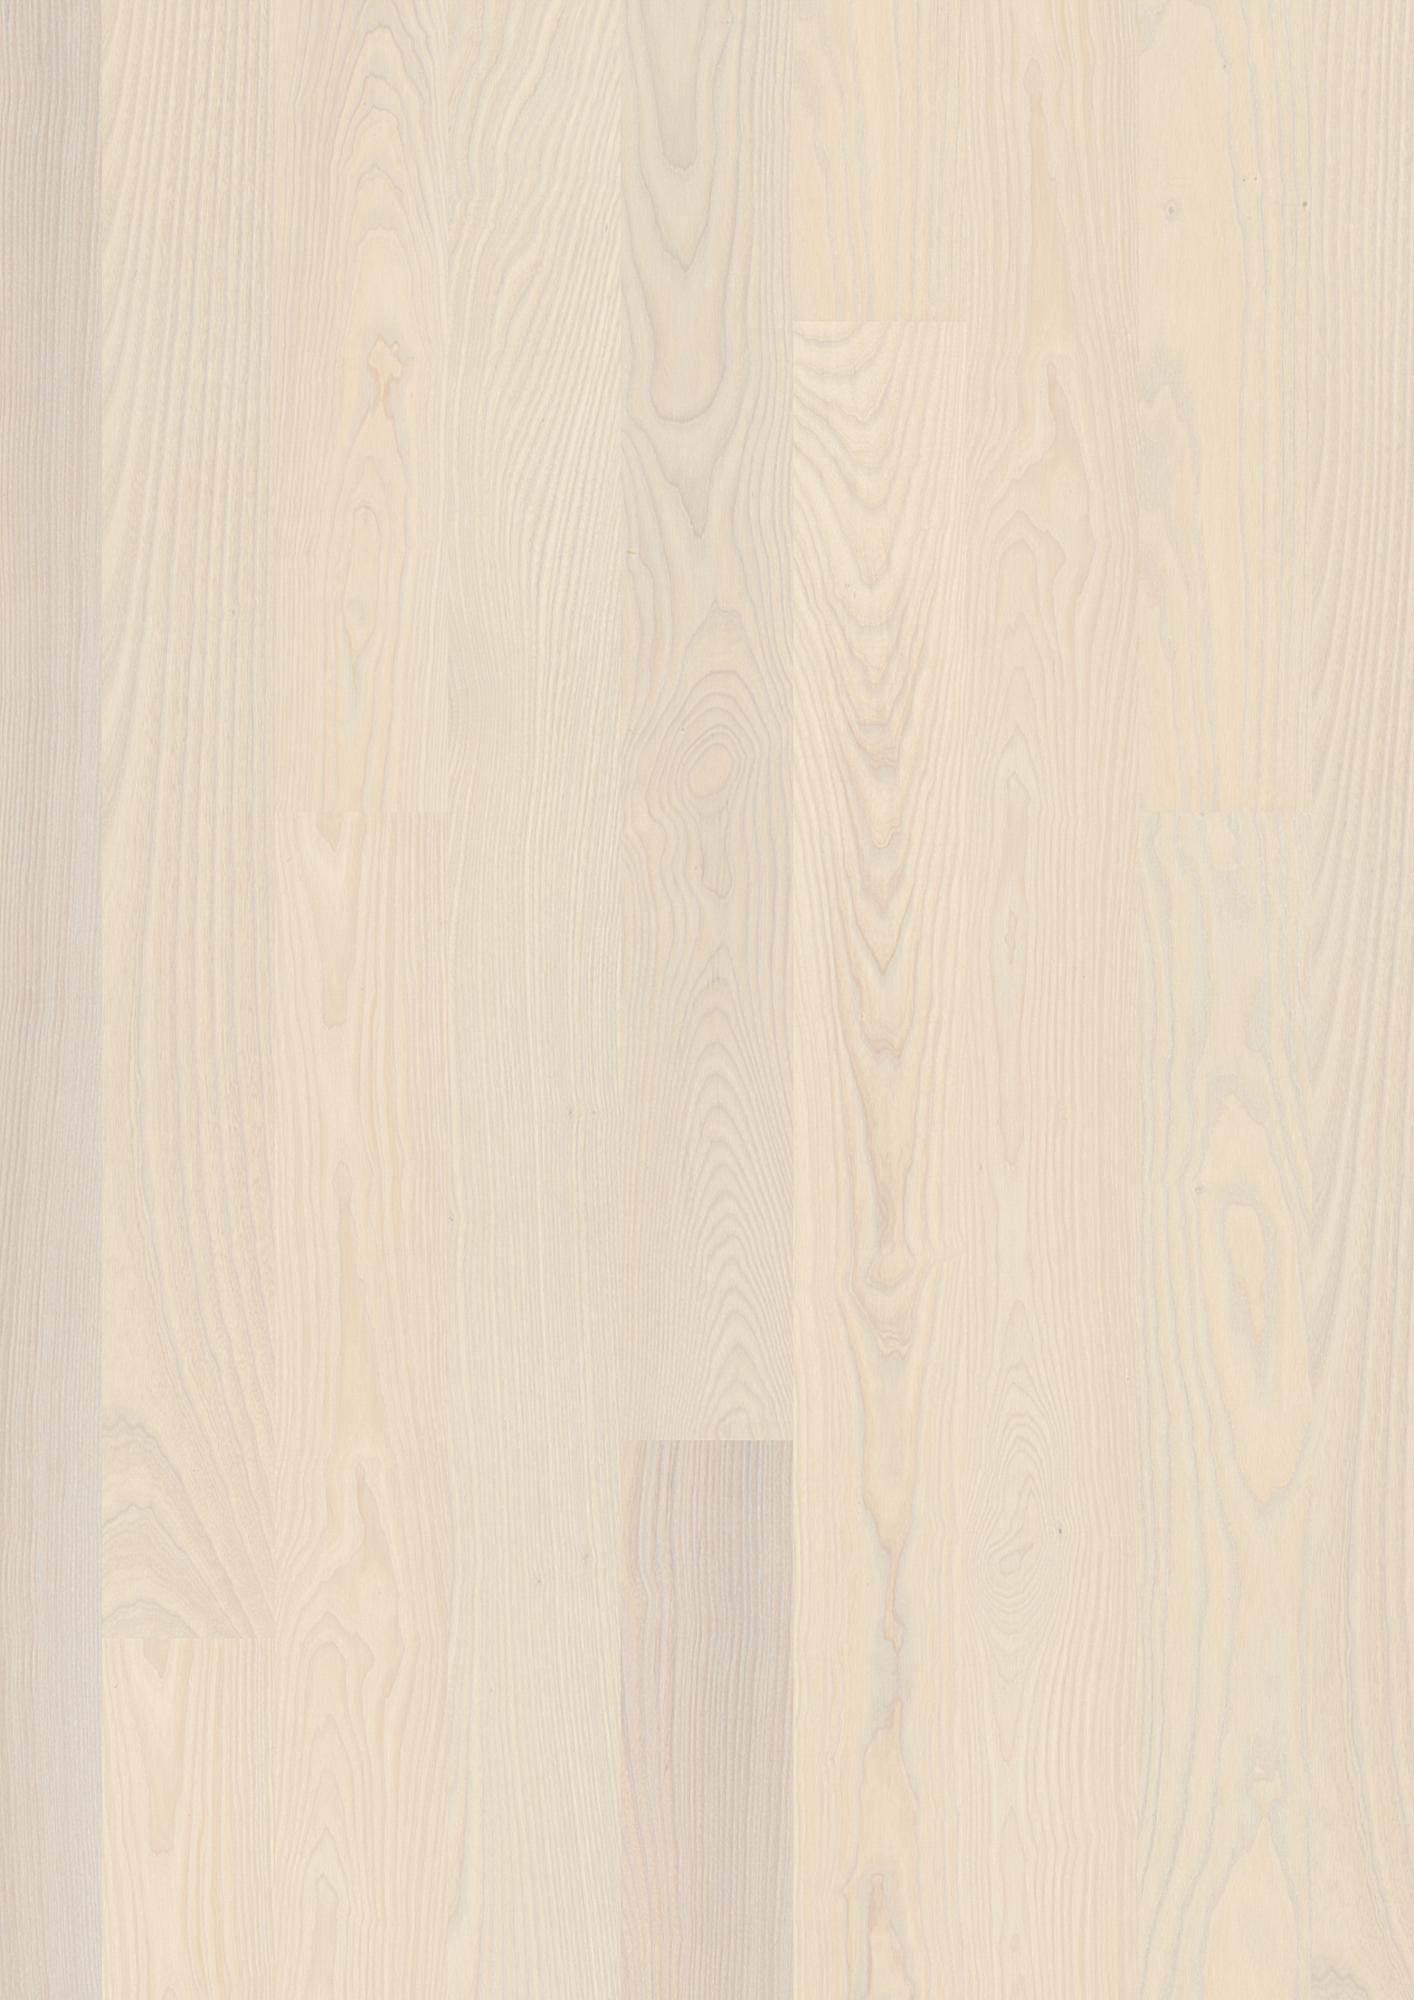 Jesion bielony Andante, 14mm Plank 138